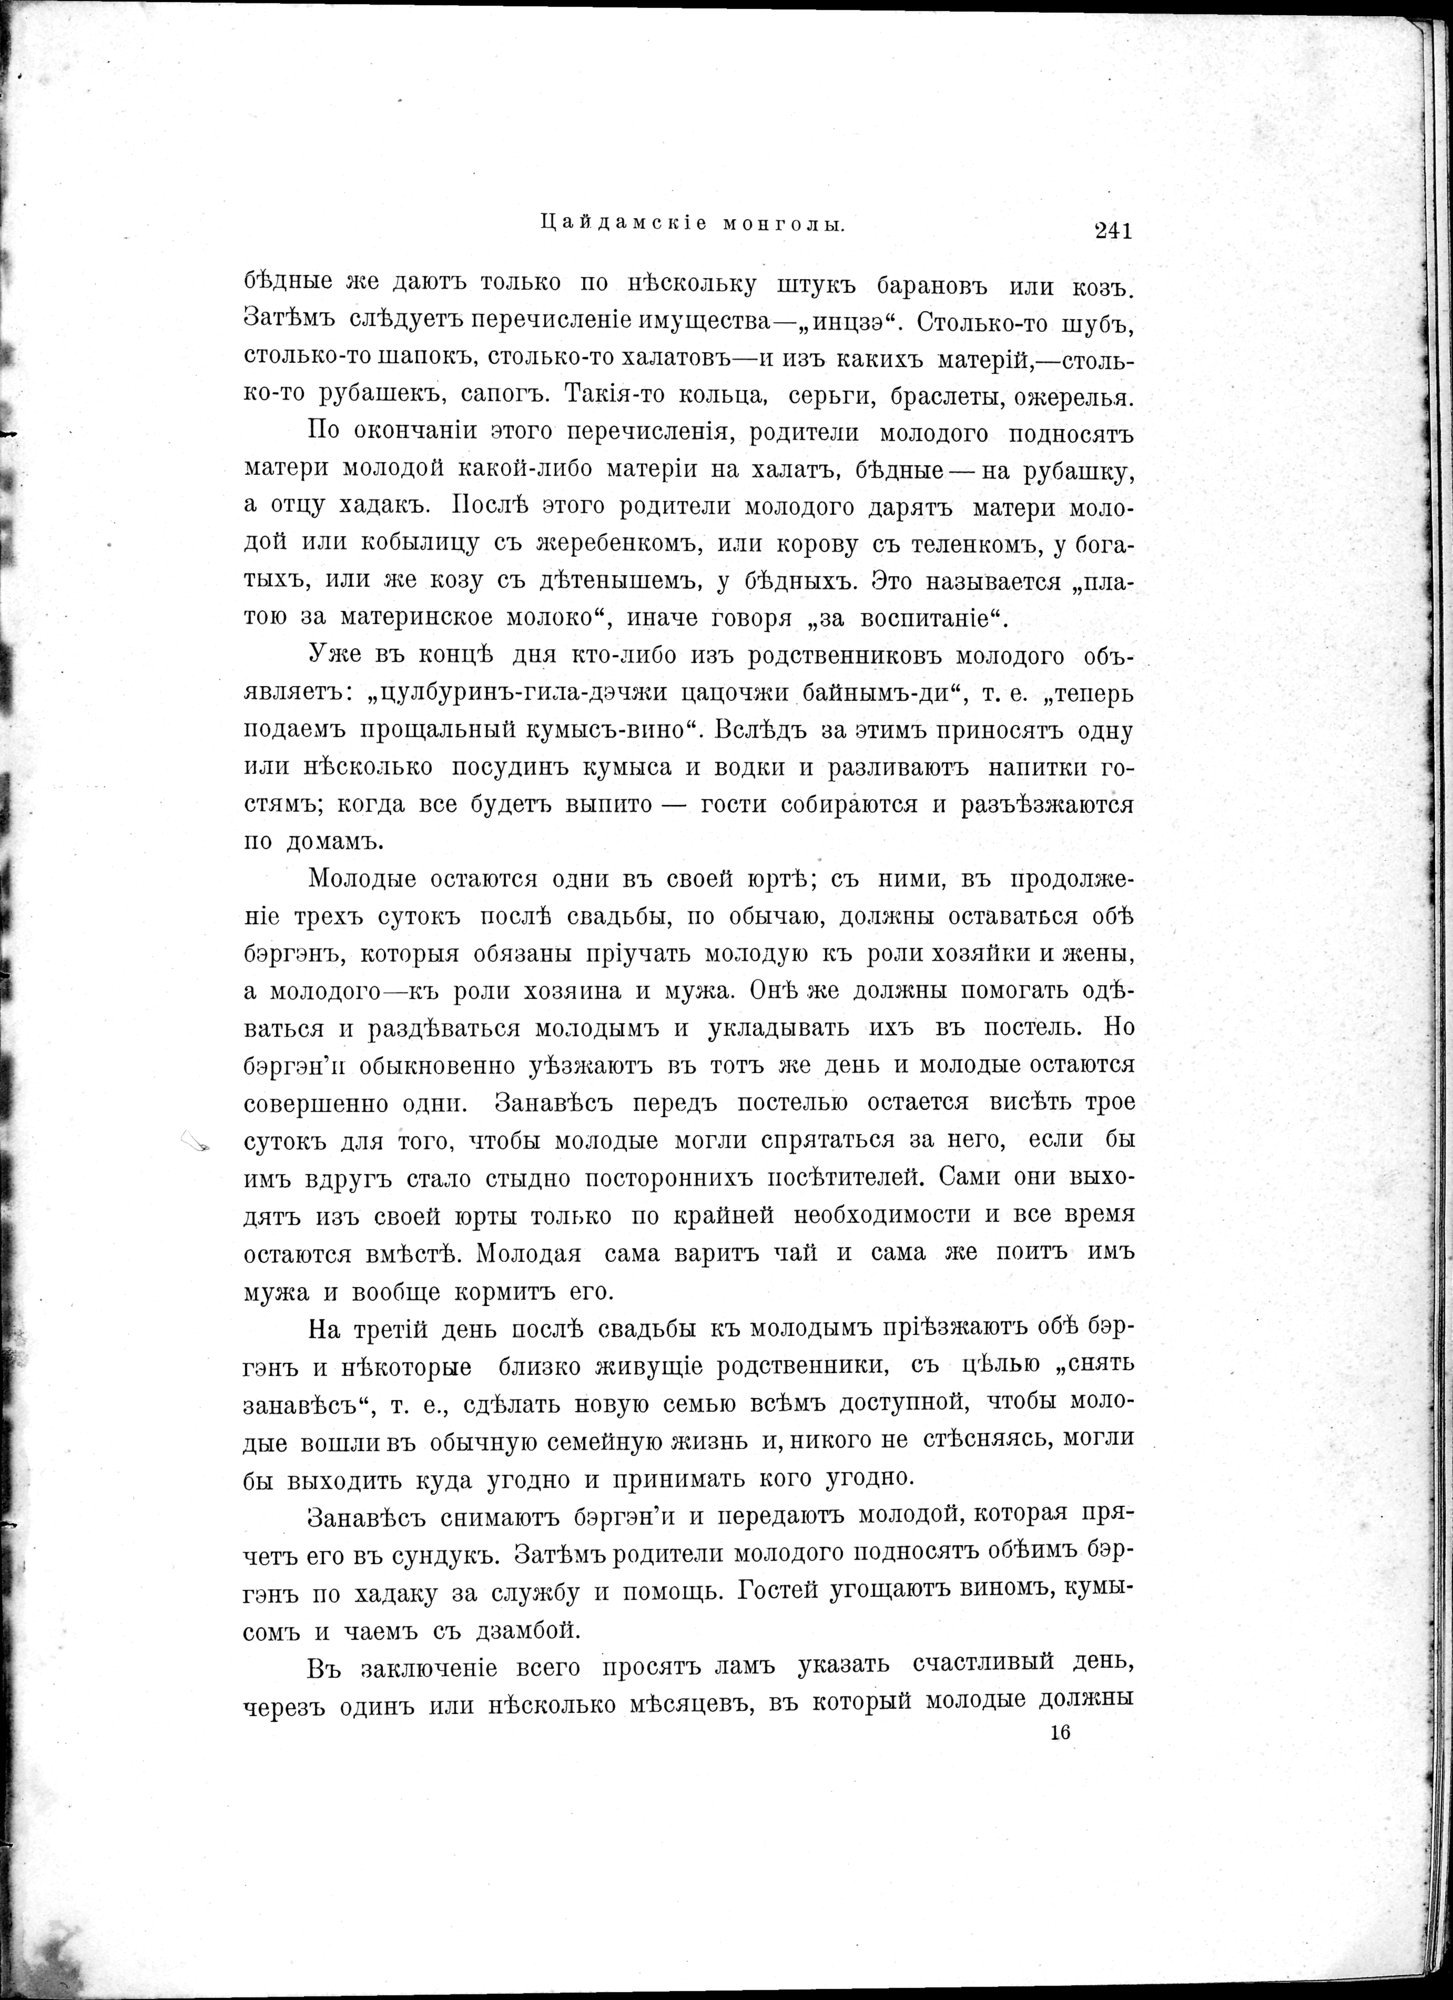 Mongoliia i Kam : vol.1 / Page 293 (Grayscale High Resolution Image)